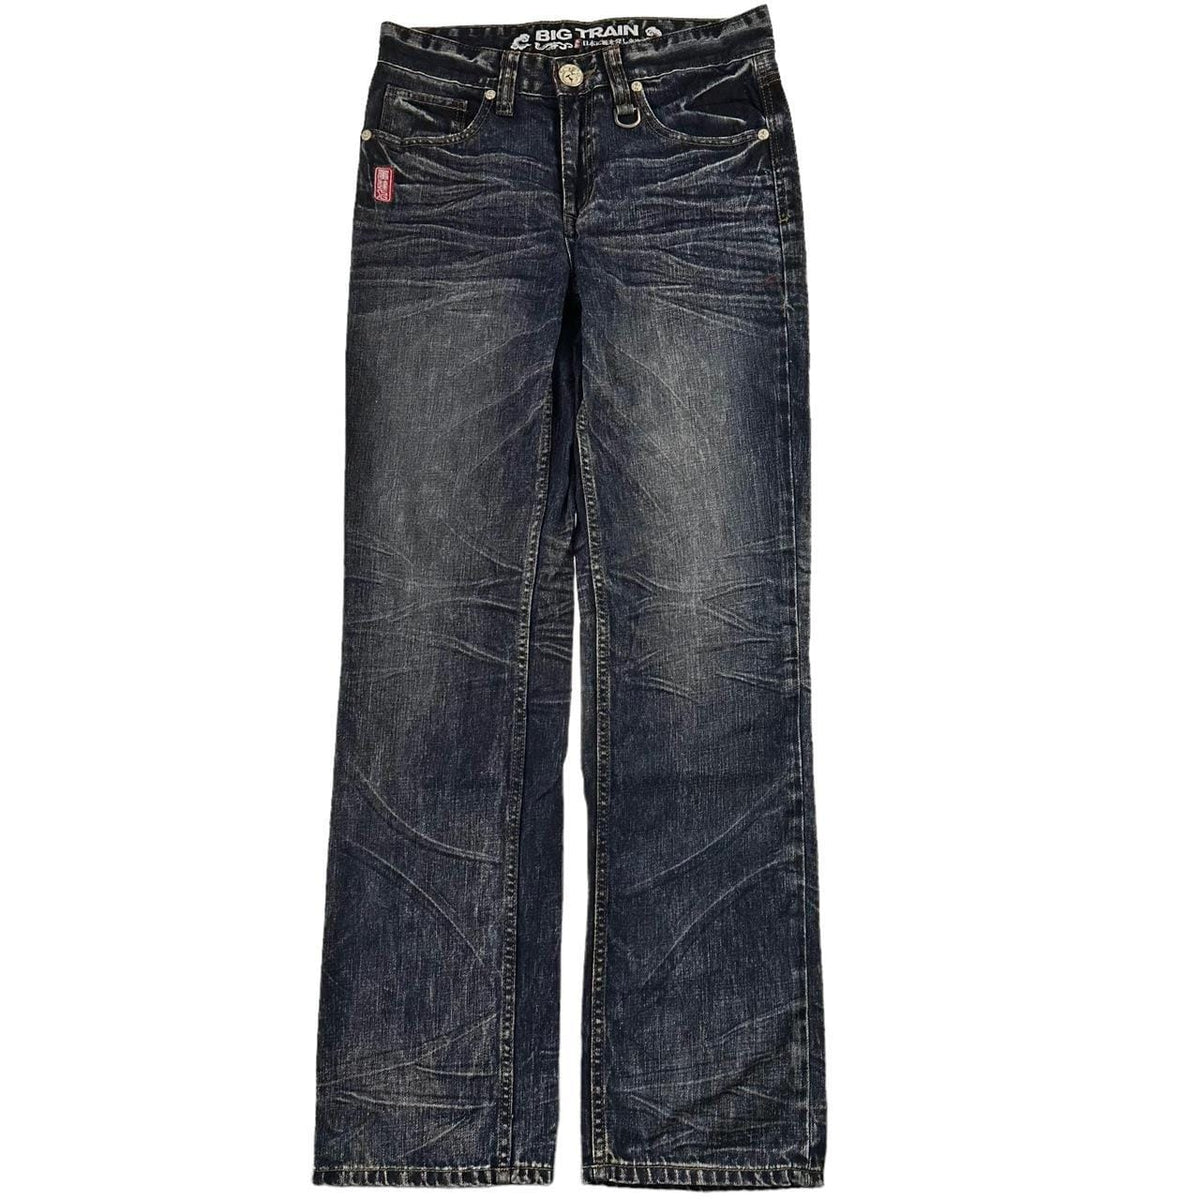 Vintage Big train wave Japanese denim jeans trousers W30